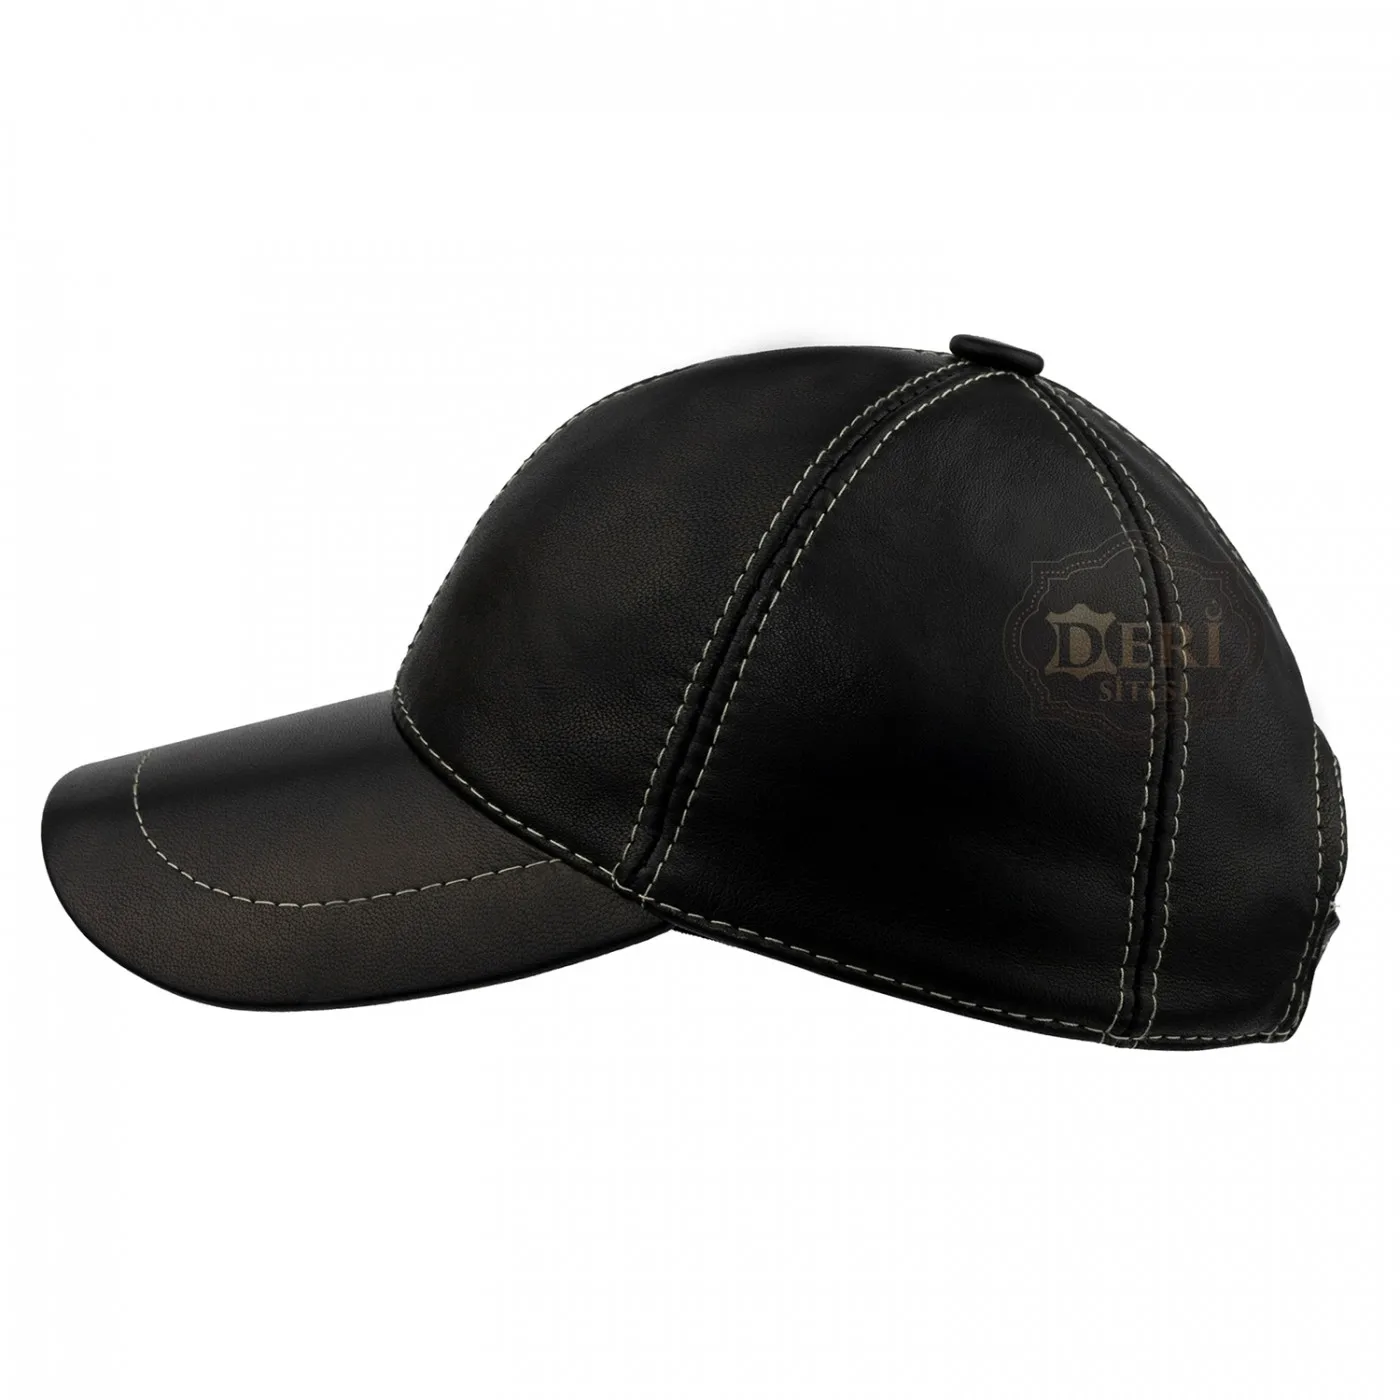 Genuine Leather Baseball Cap - Unisex Baseball Cap - Sheepskin Adjustable Classic Referee Snapback Hat 100% original leather